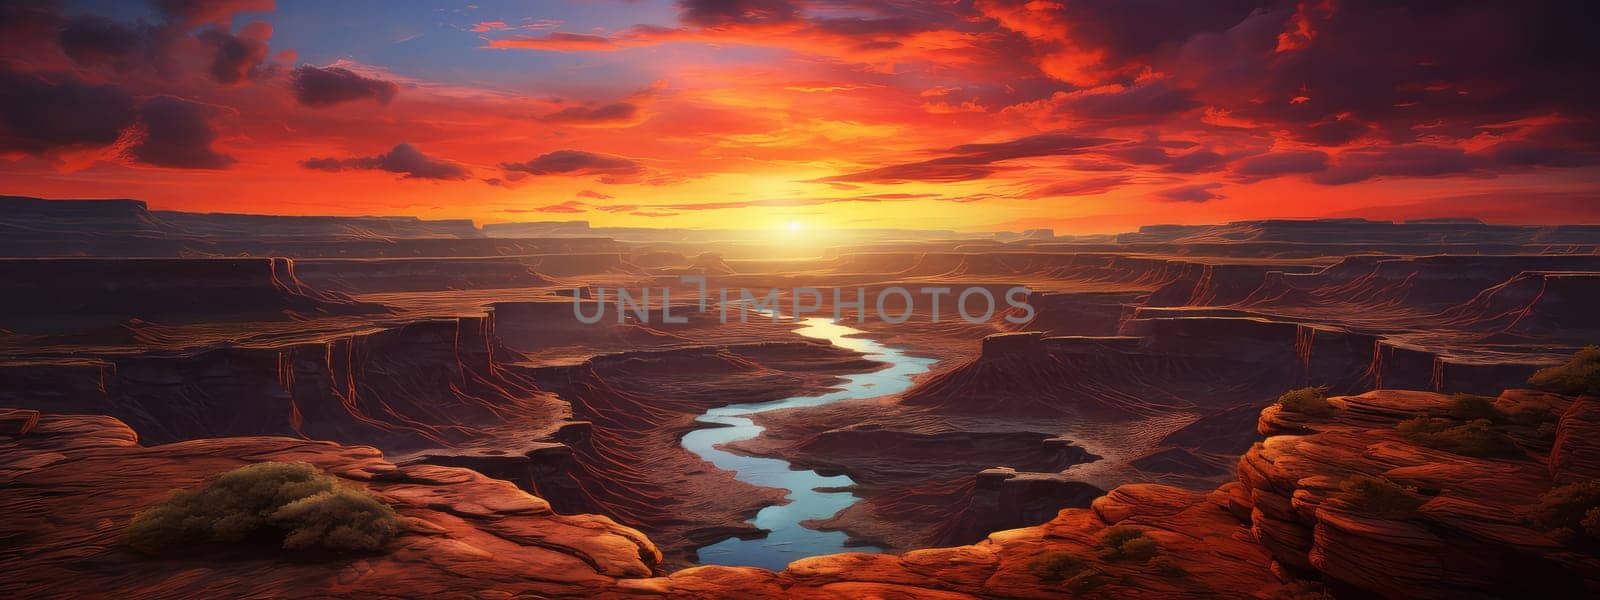 Canyon at dusk photo realistic illustration - Generative AI. Canyon, dusk, red, sky.